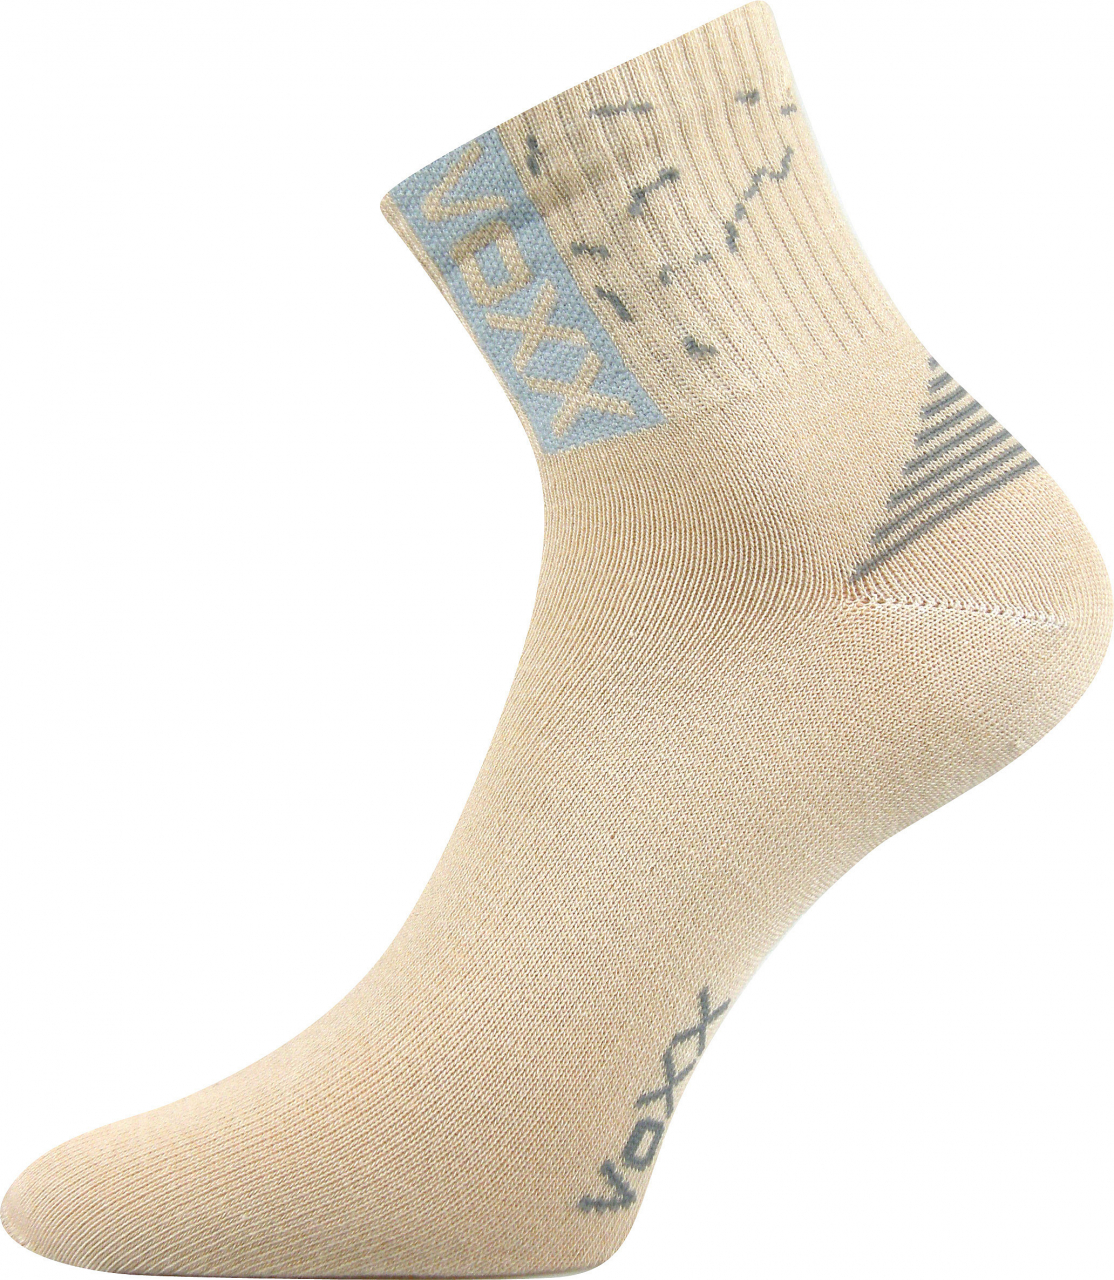 Ponožky sportovní Voxx Codex - béžové, 43-46